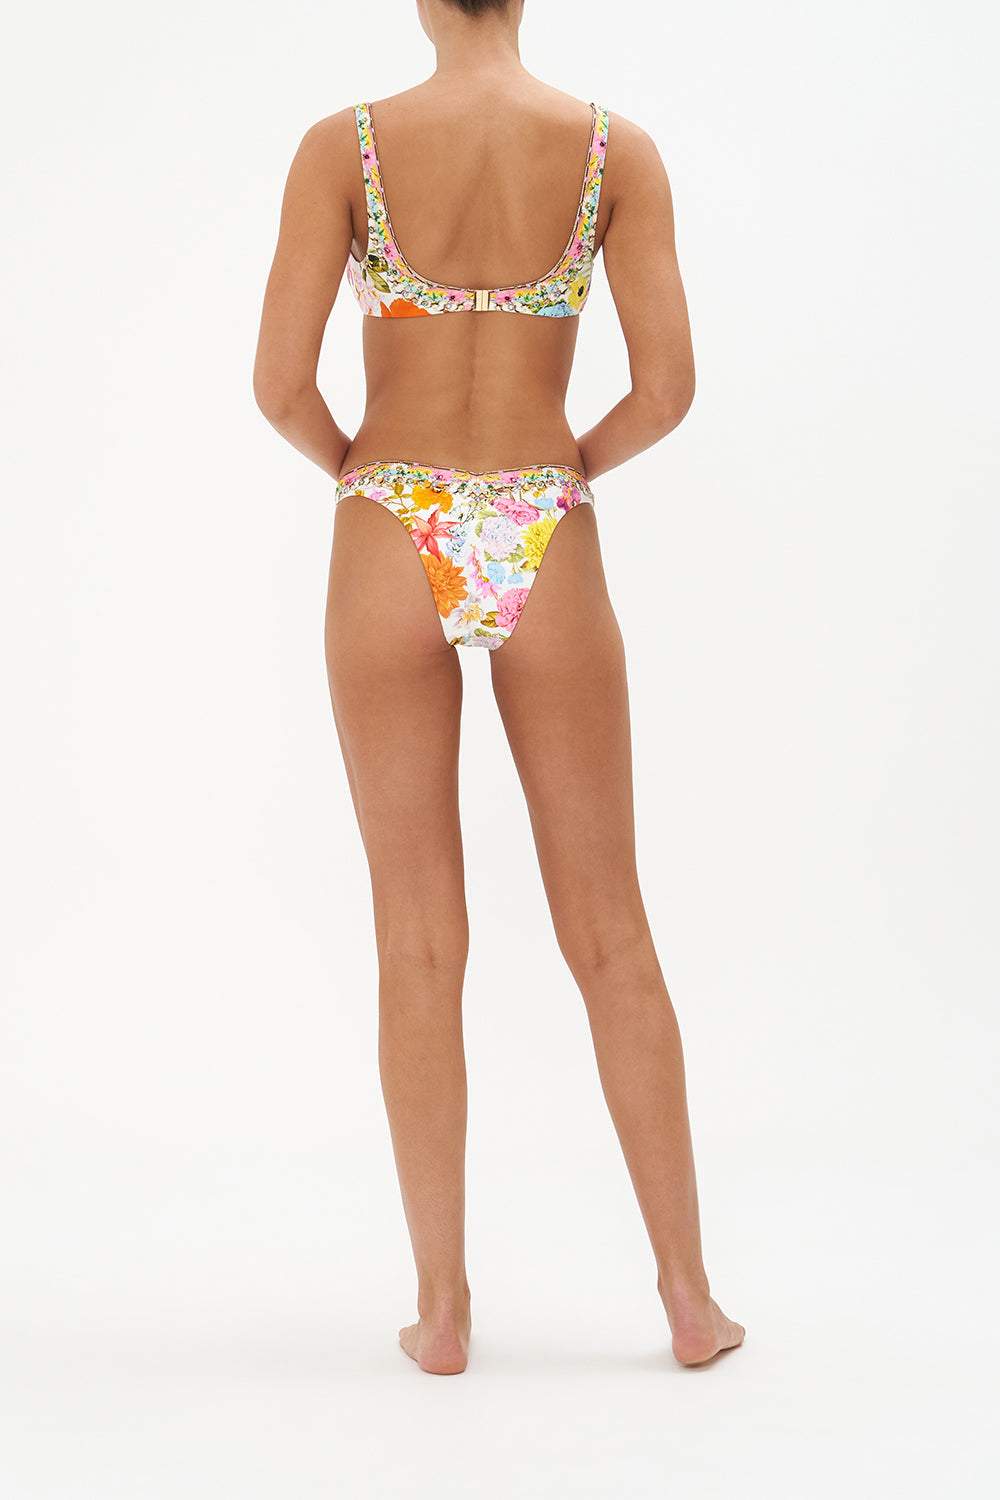 swimwear-Thalia Printed Three-pieces Bikini Set-SW0020623546-Multi-S - Sunfere